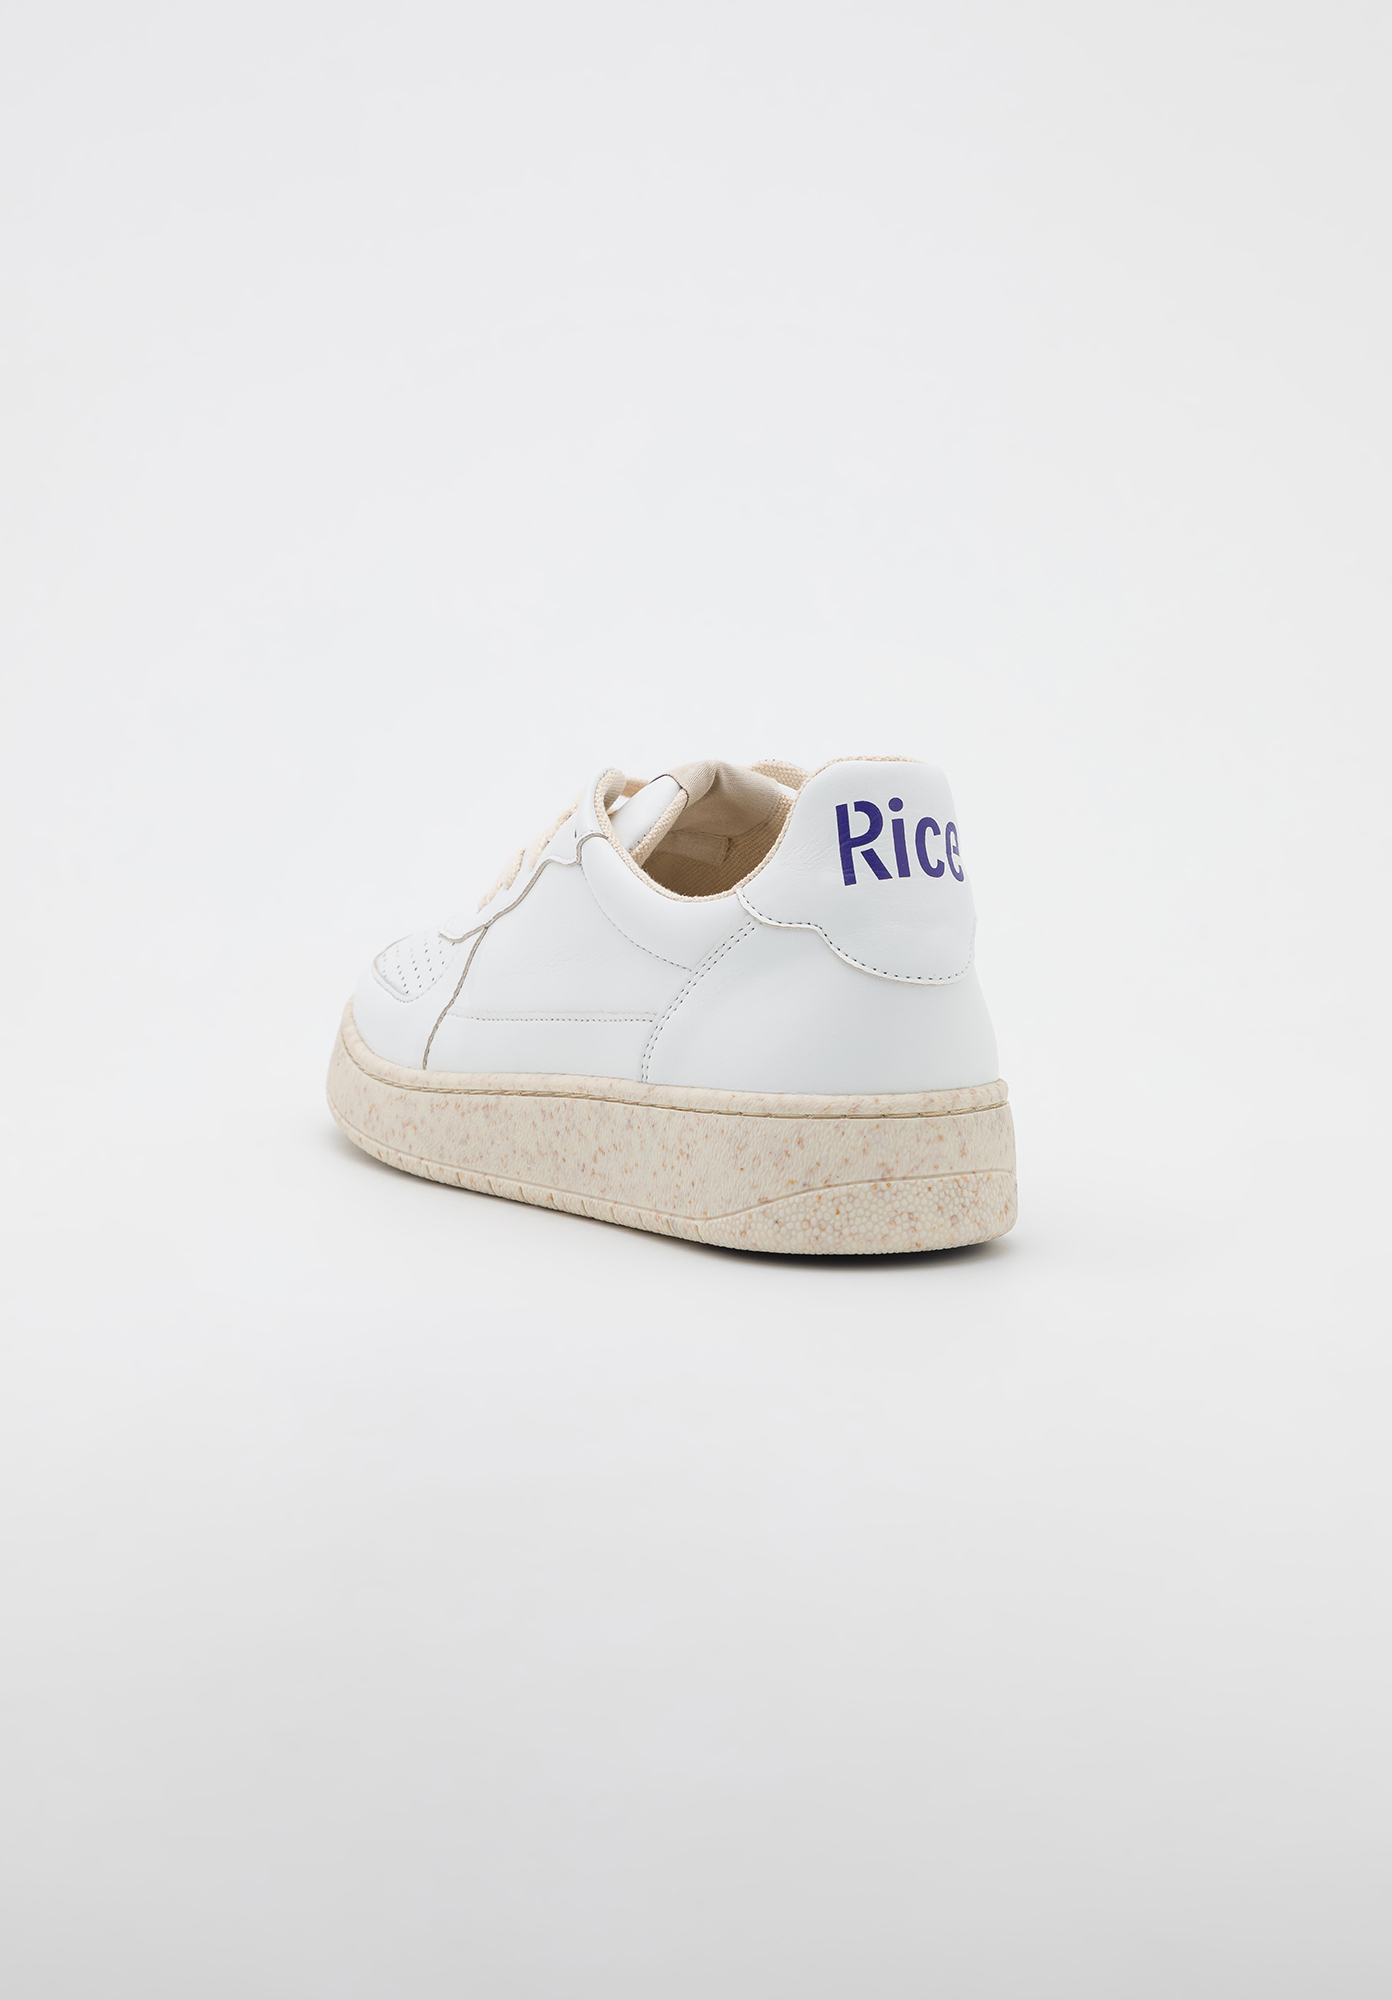 RICE Sneaker Open21 white 40